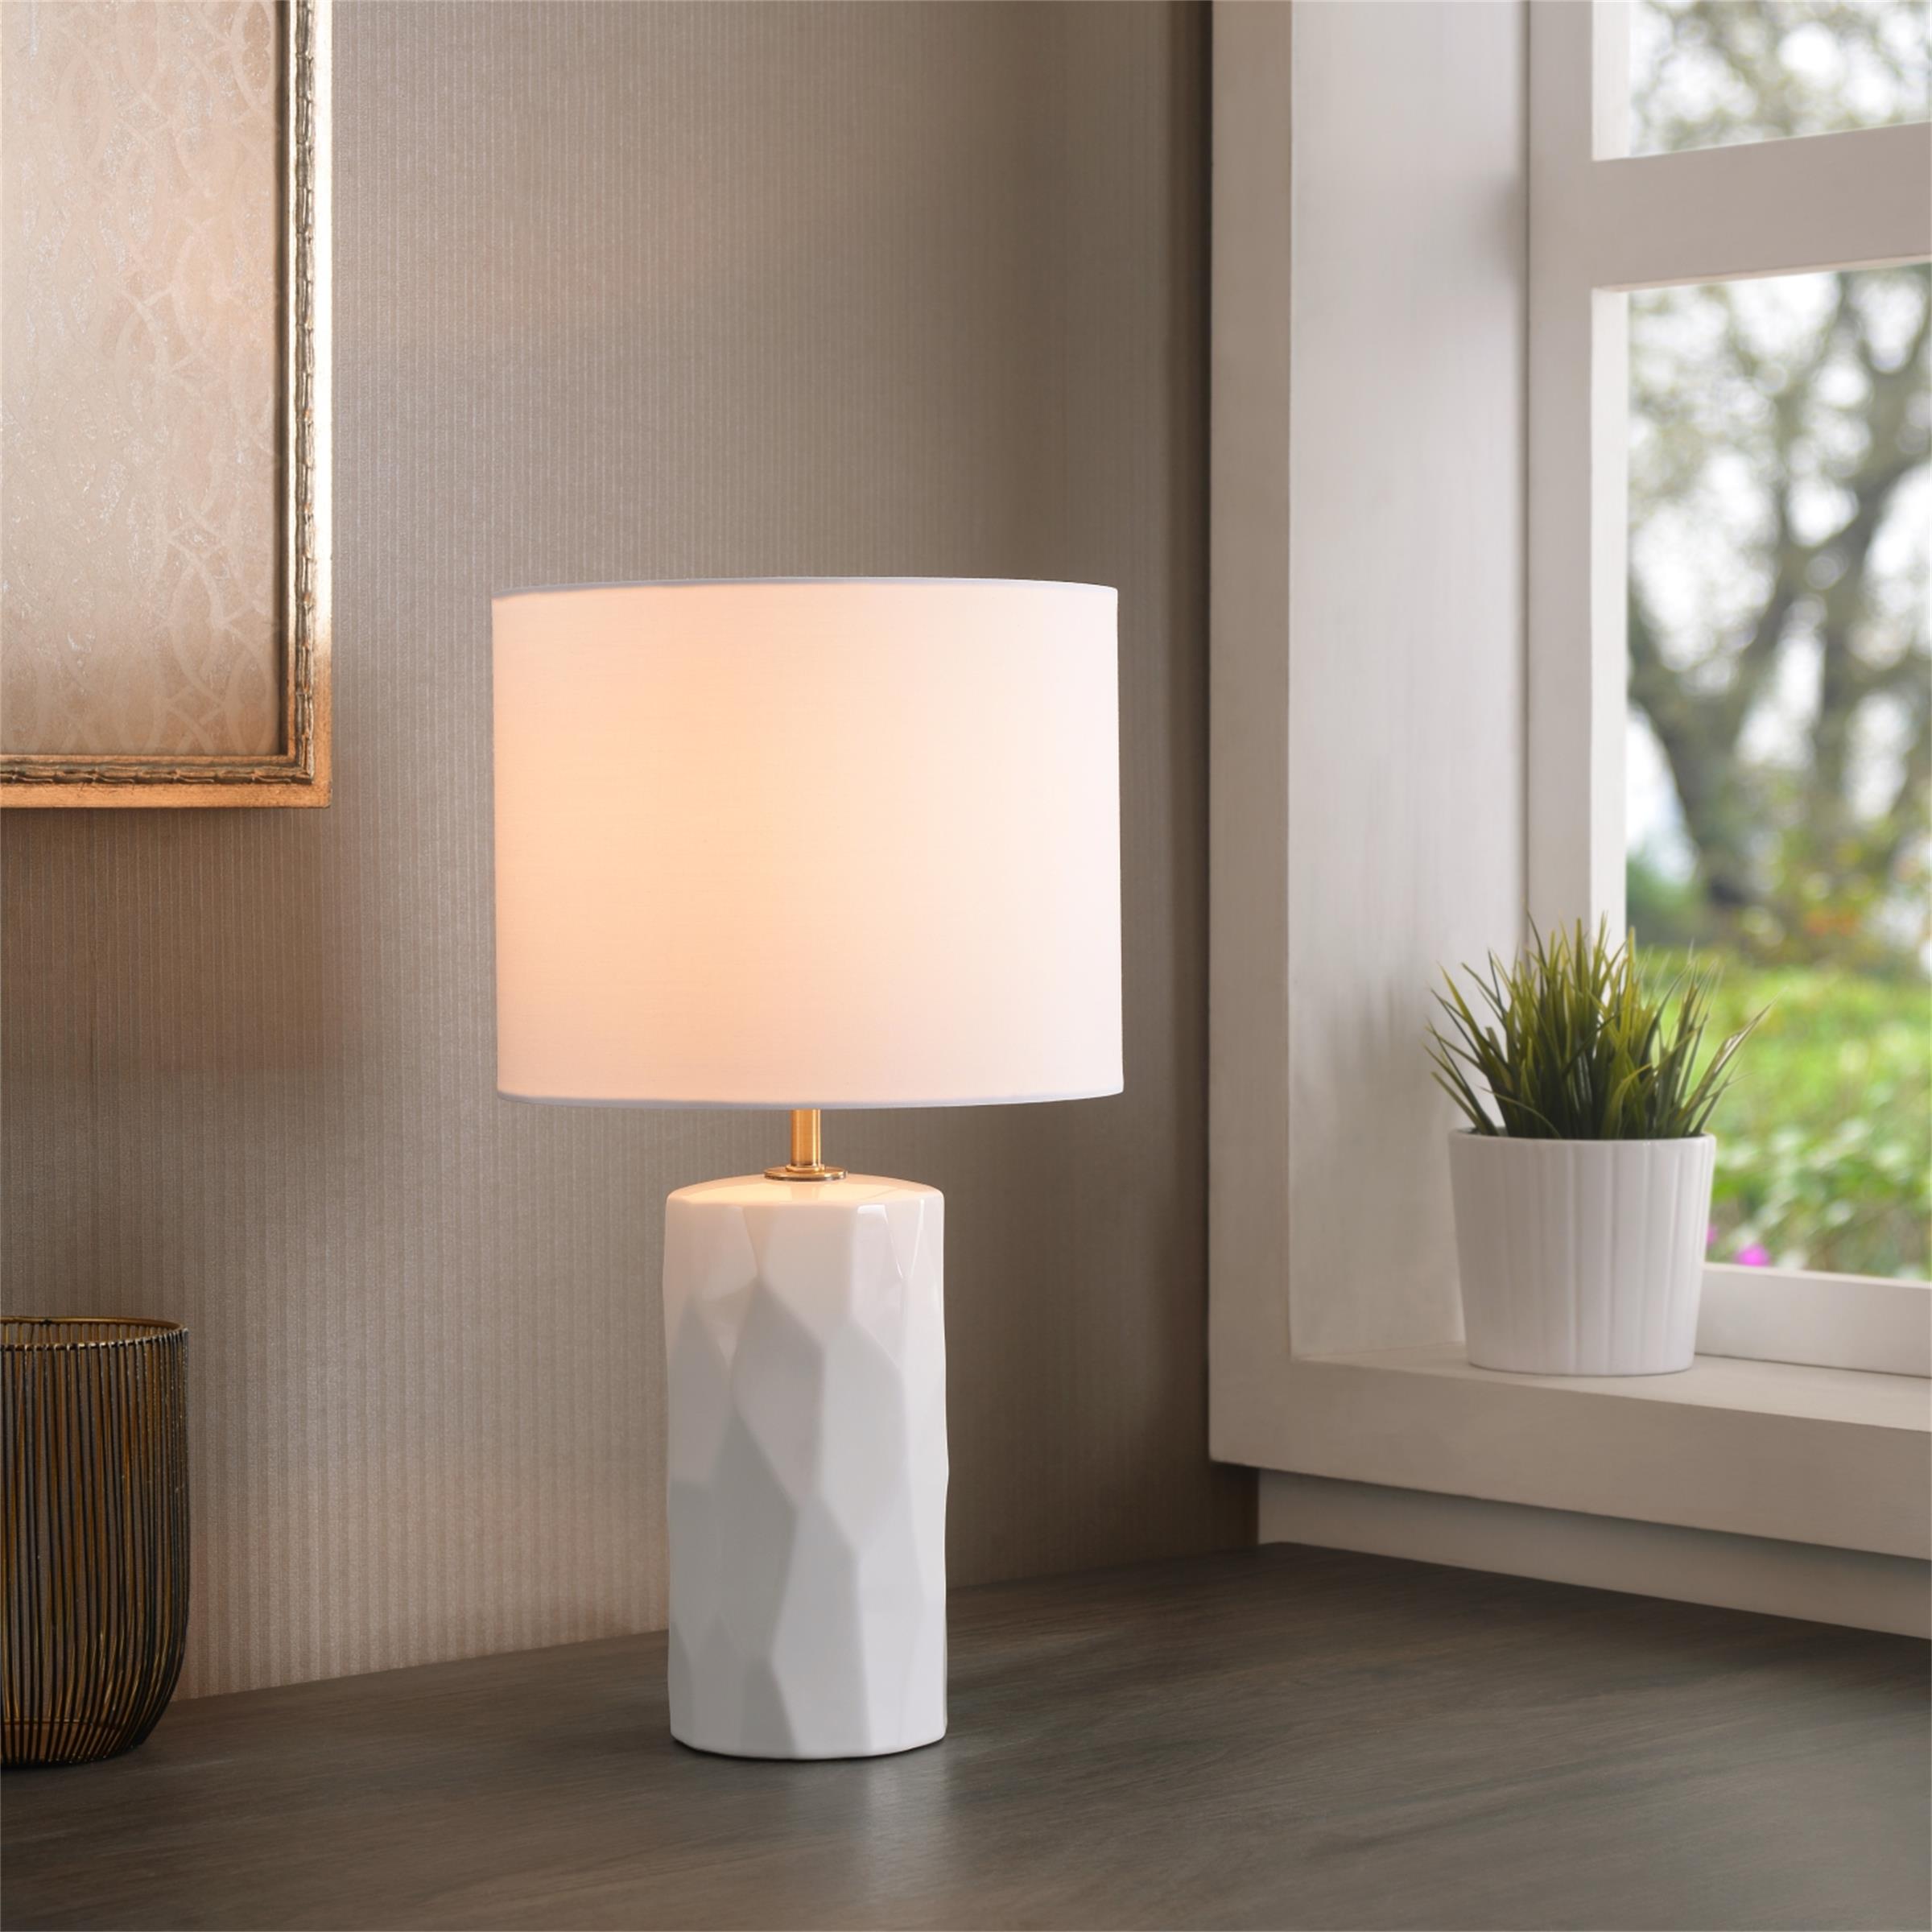 Mainstays White Ceramic Table Lamp, 17"H - image 3 of 6